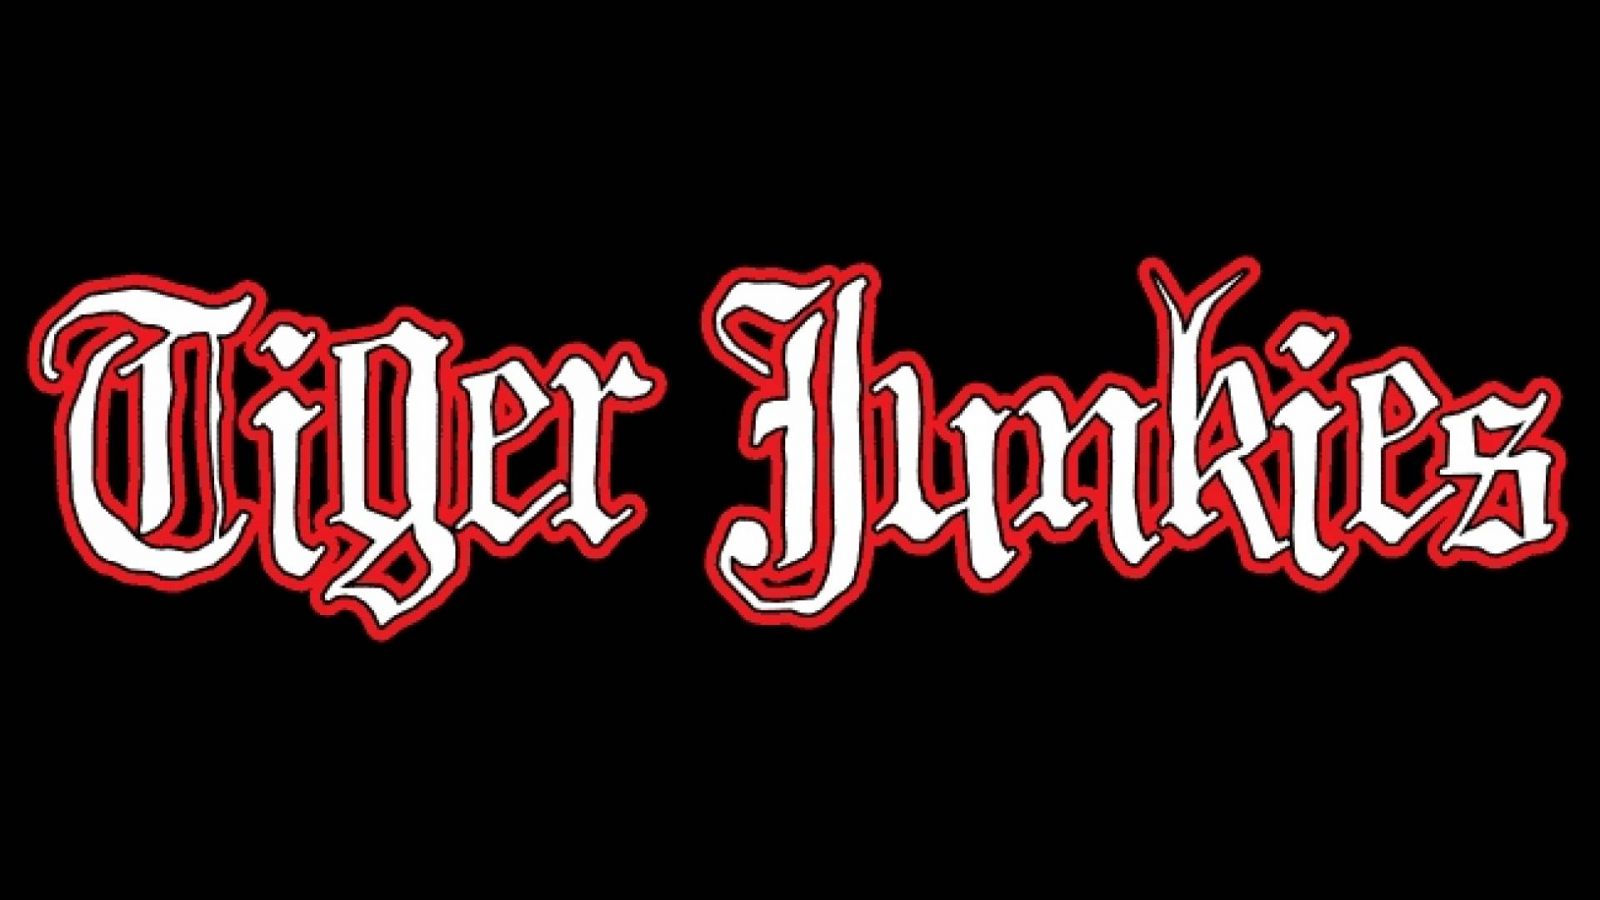 TIGER JUNKIES © TIGER JUNKIES. All Rights Reserved